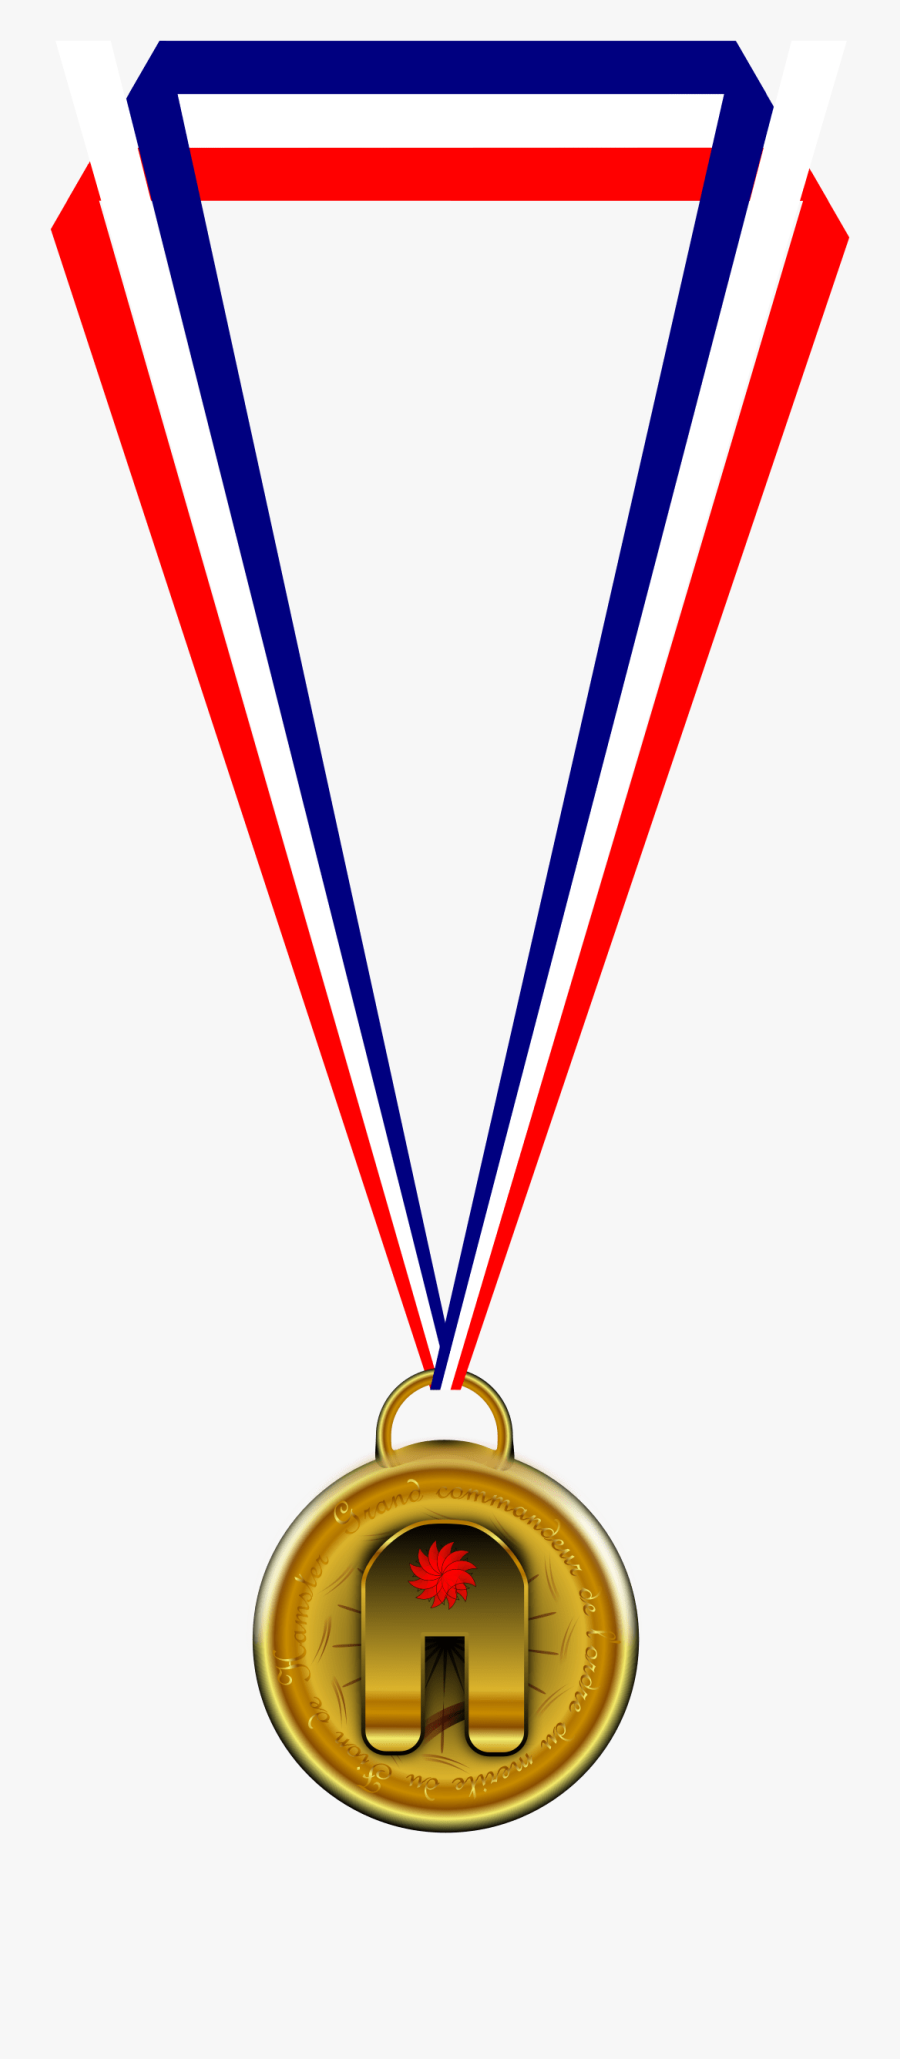 Medals Clipart - Medal Clipart, Transparent Clipart